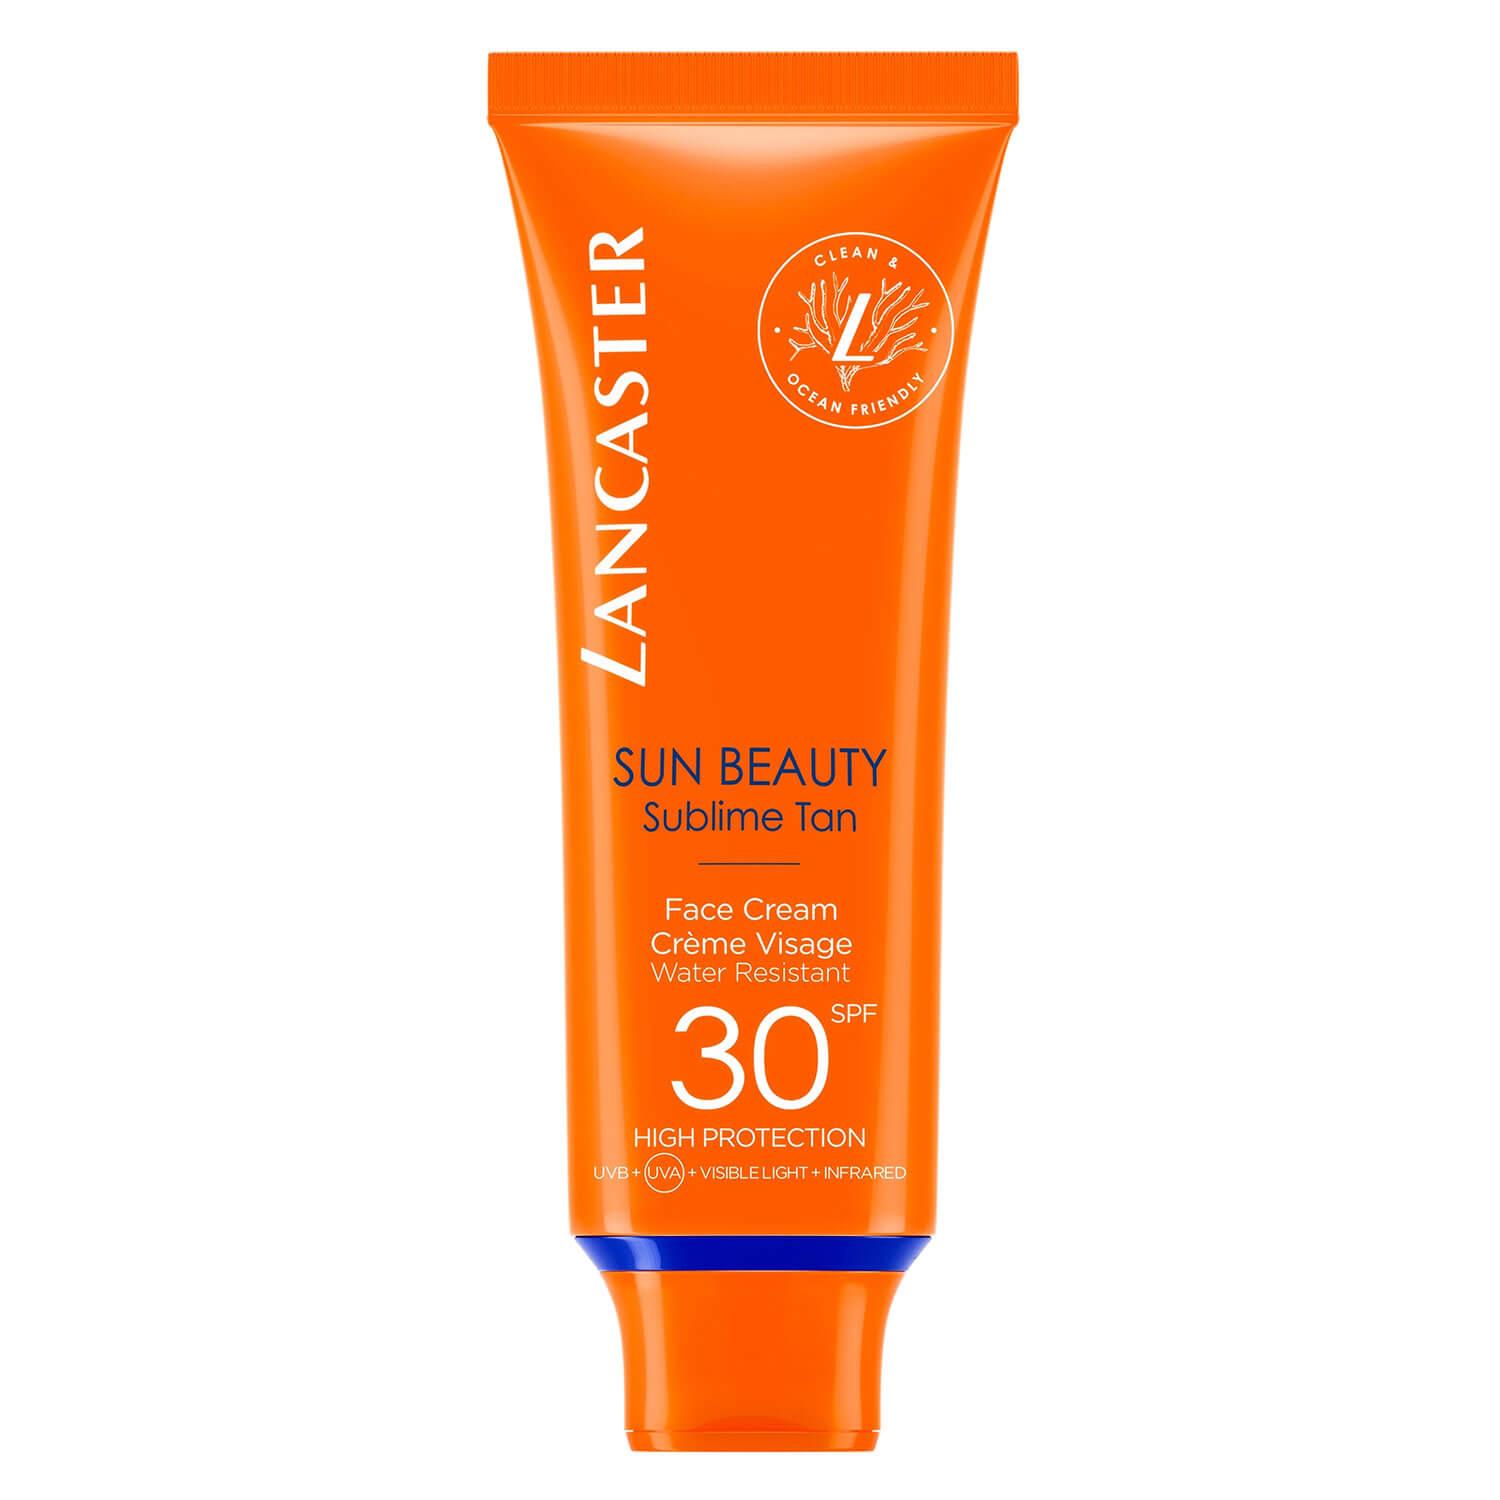 Sun Beauty - Sublime Tan Face Cream SPF30